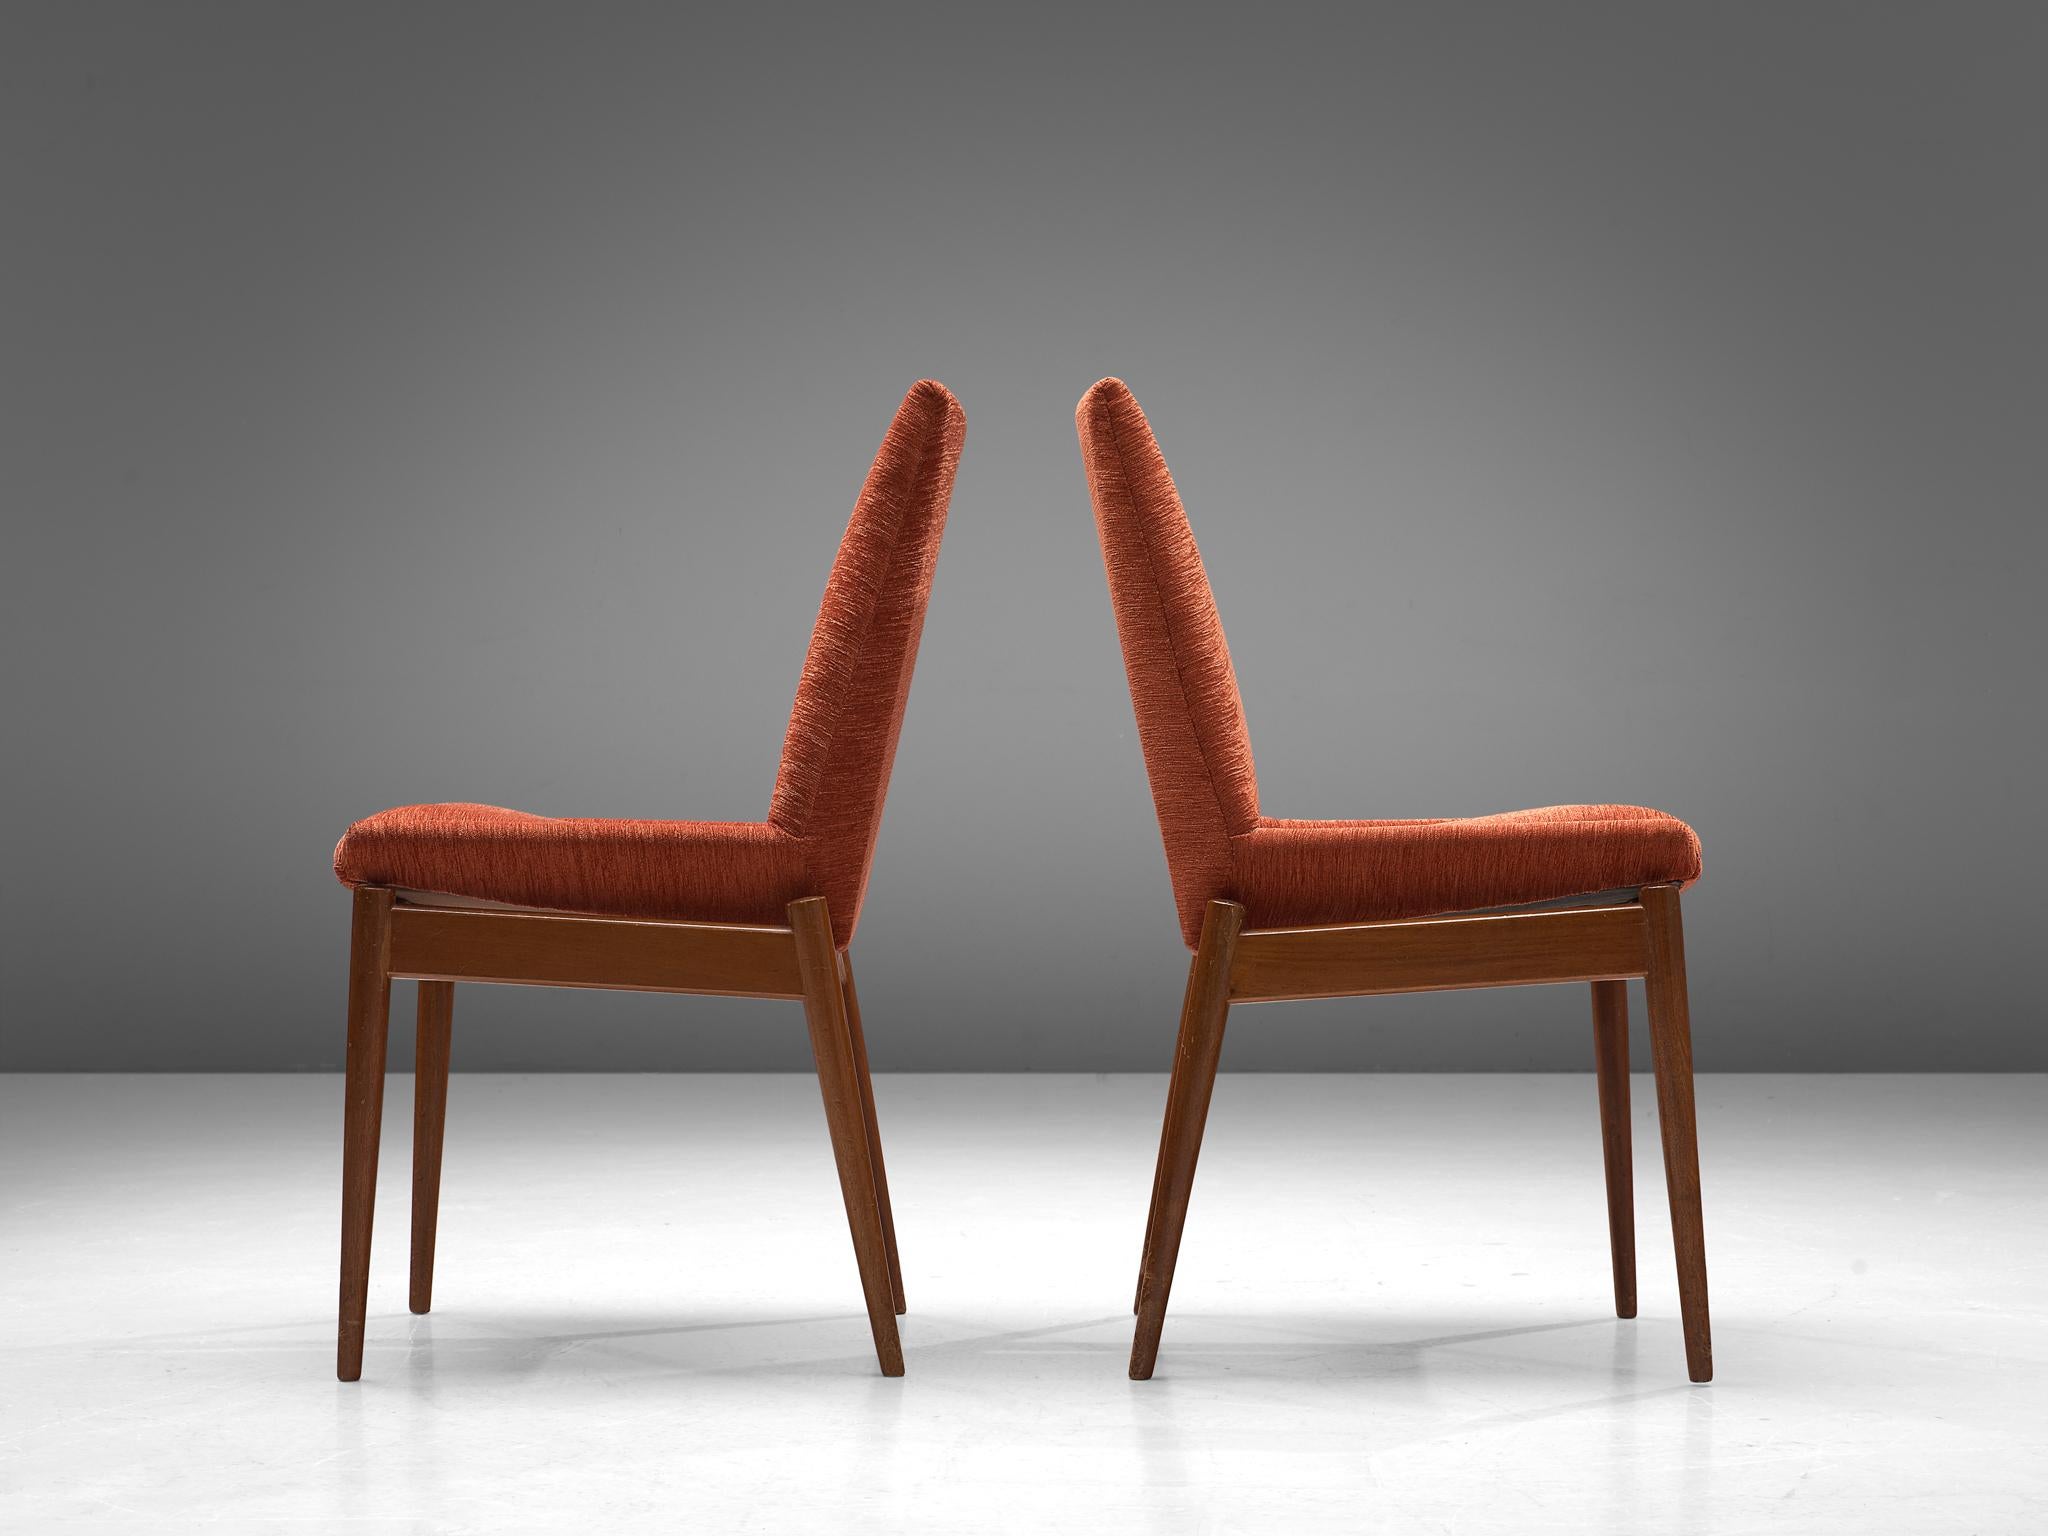 Mid-20th Century Scandinavian Chairs in Teak and Terracotta Corduroy